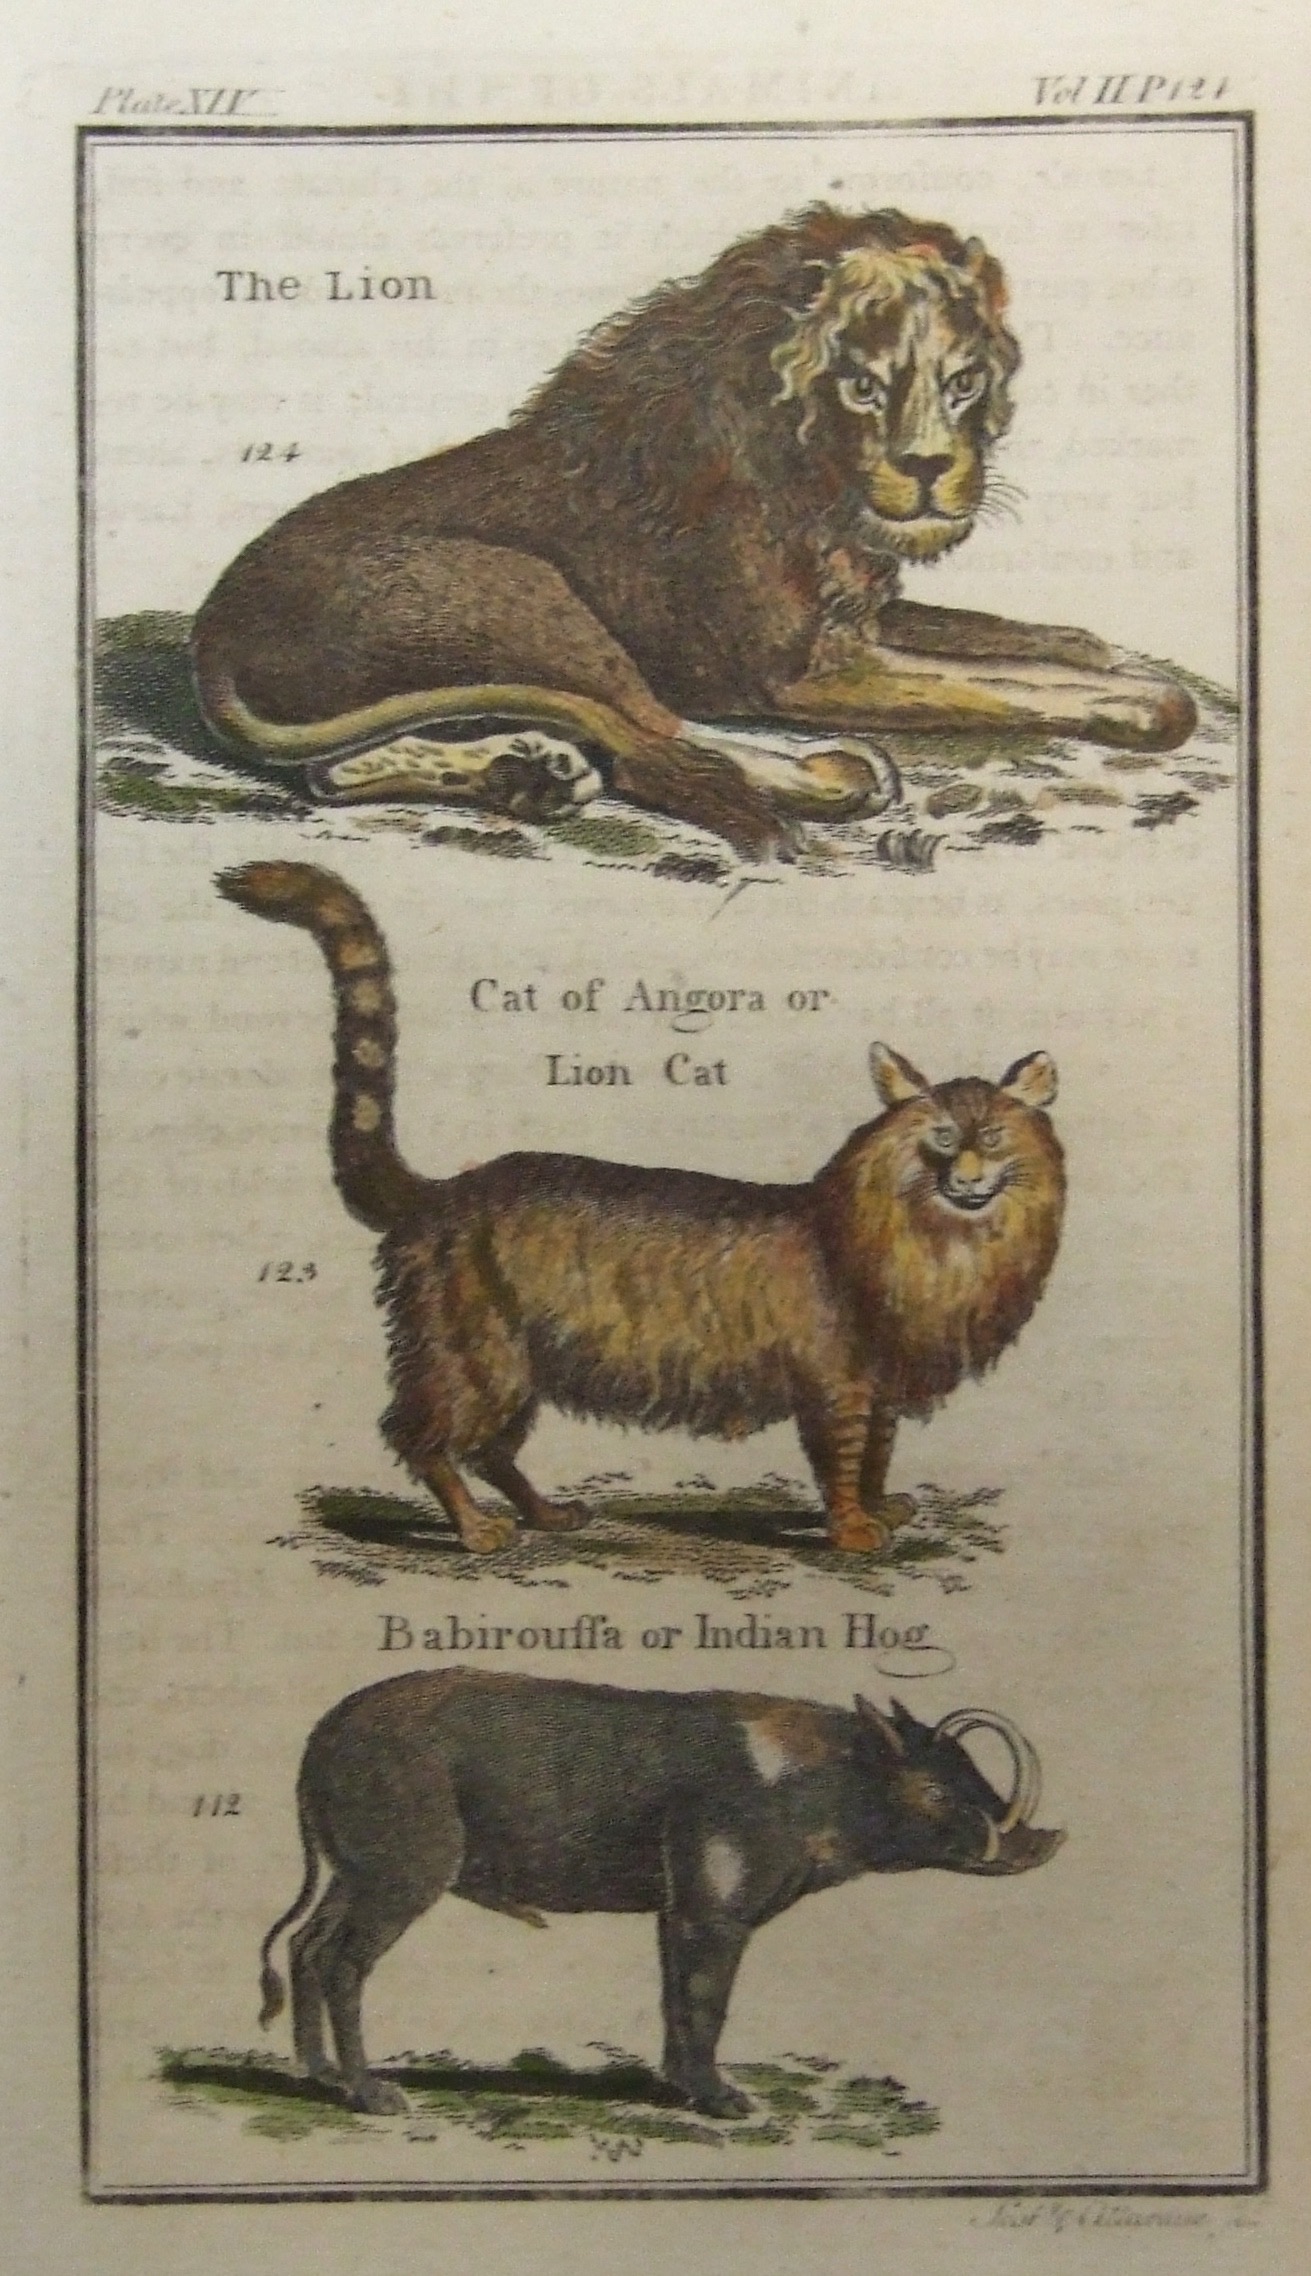 The Lion, Cat of Angora or Lion Cat, Babiroussa or Indian Hog